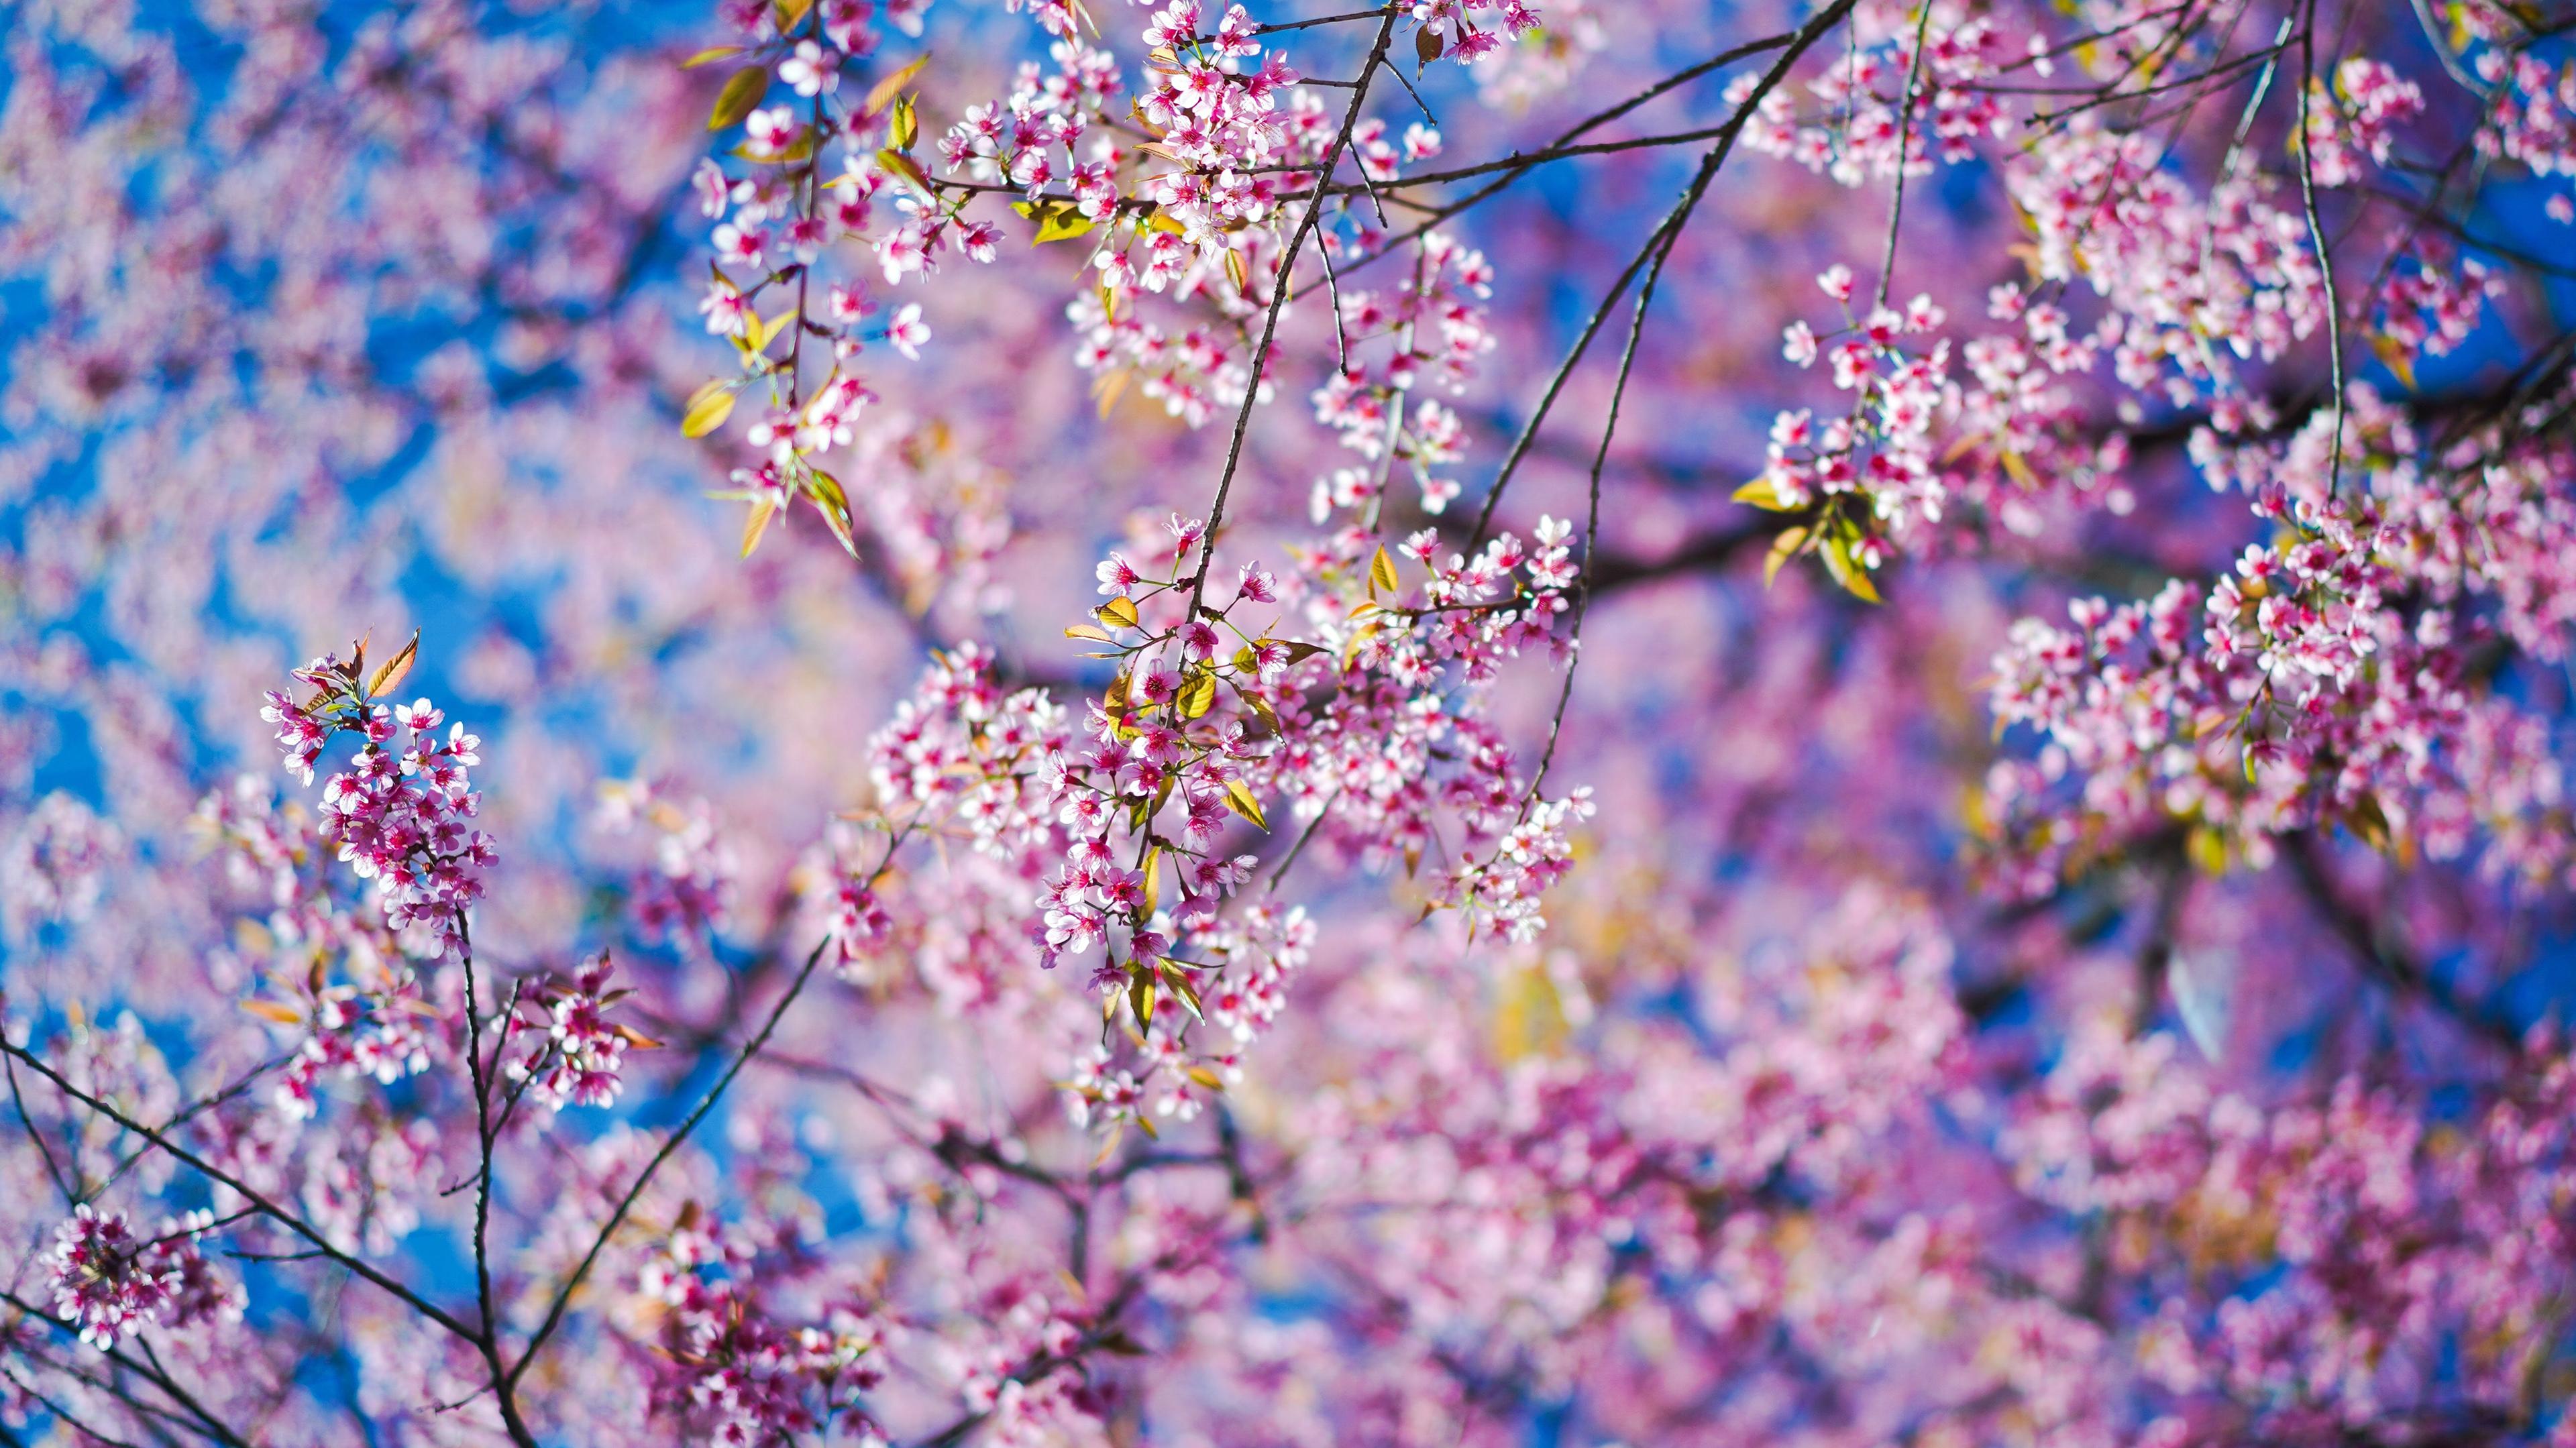 Nature Blossom 4k Ultra HD Wallpaper